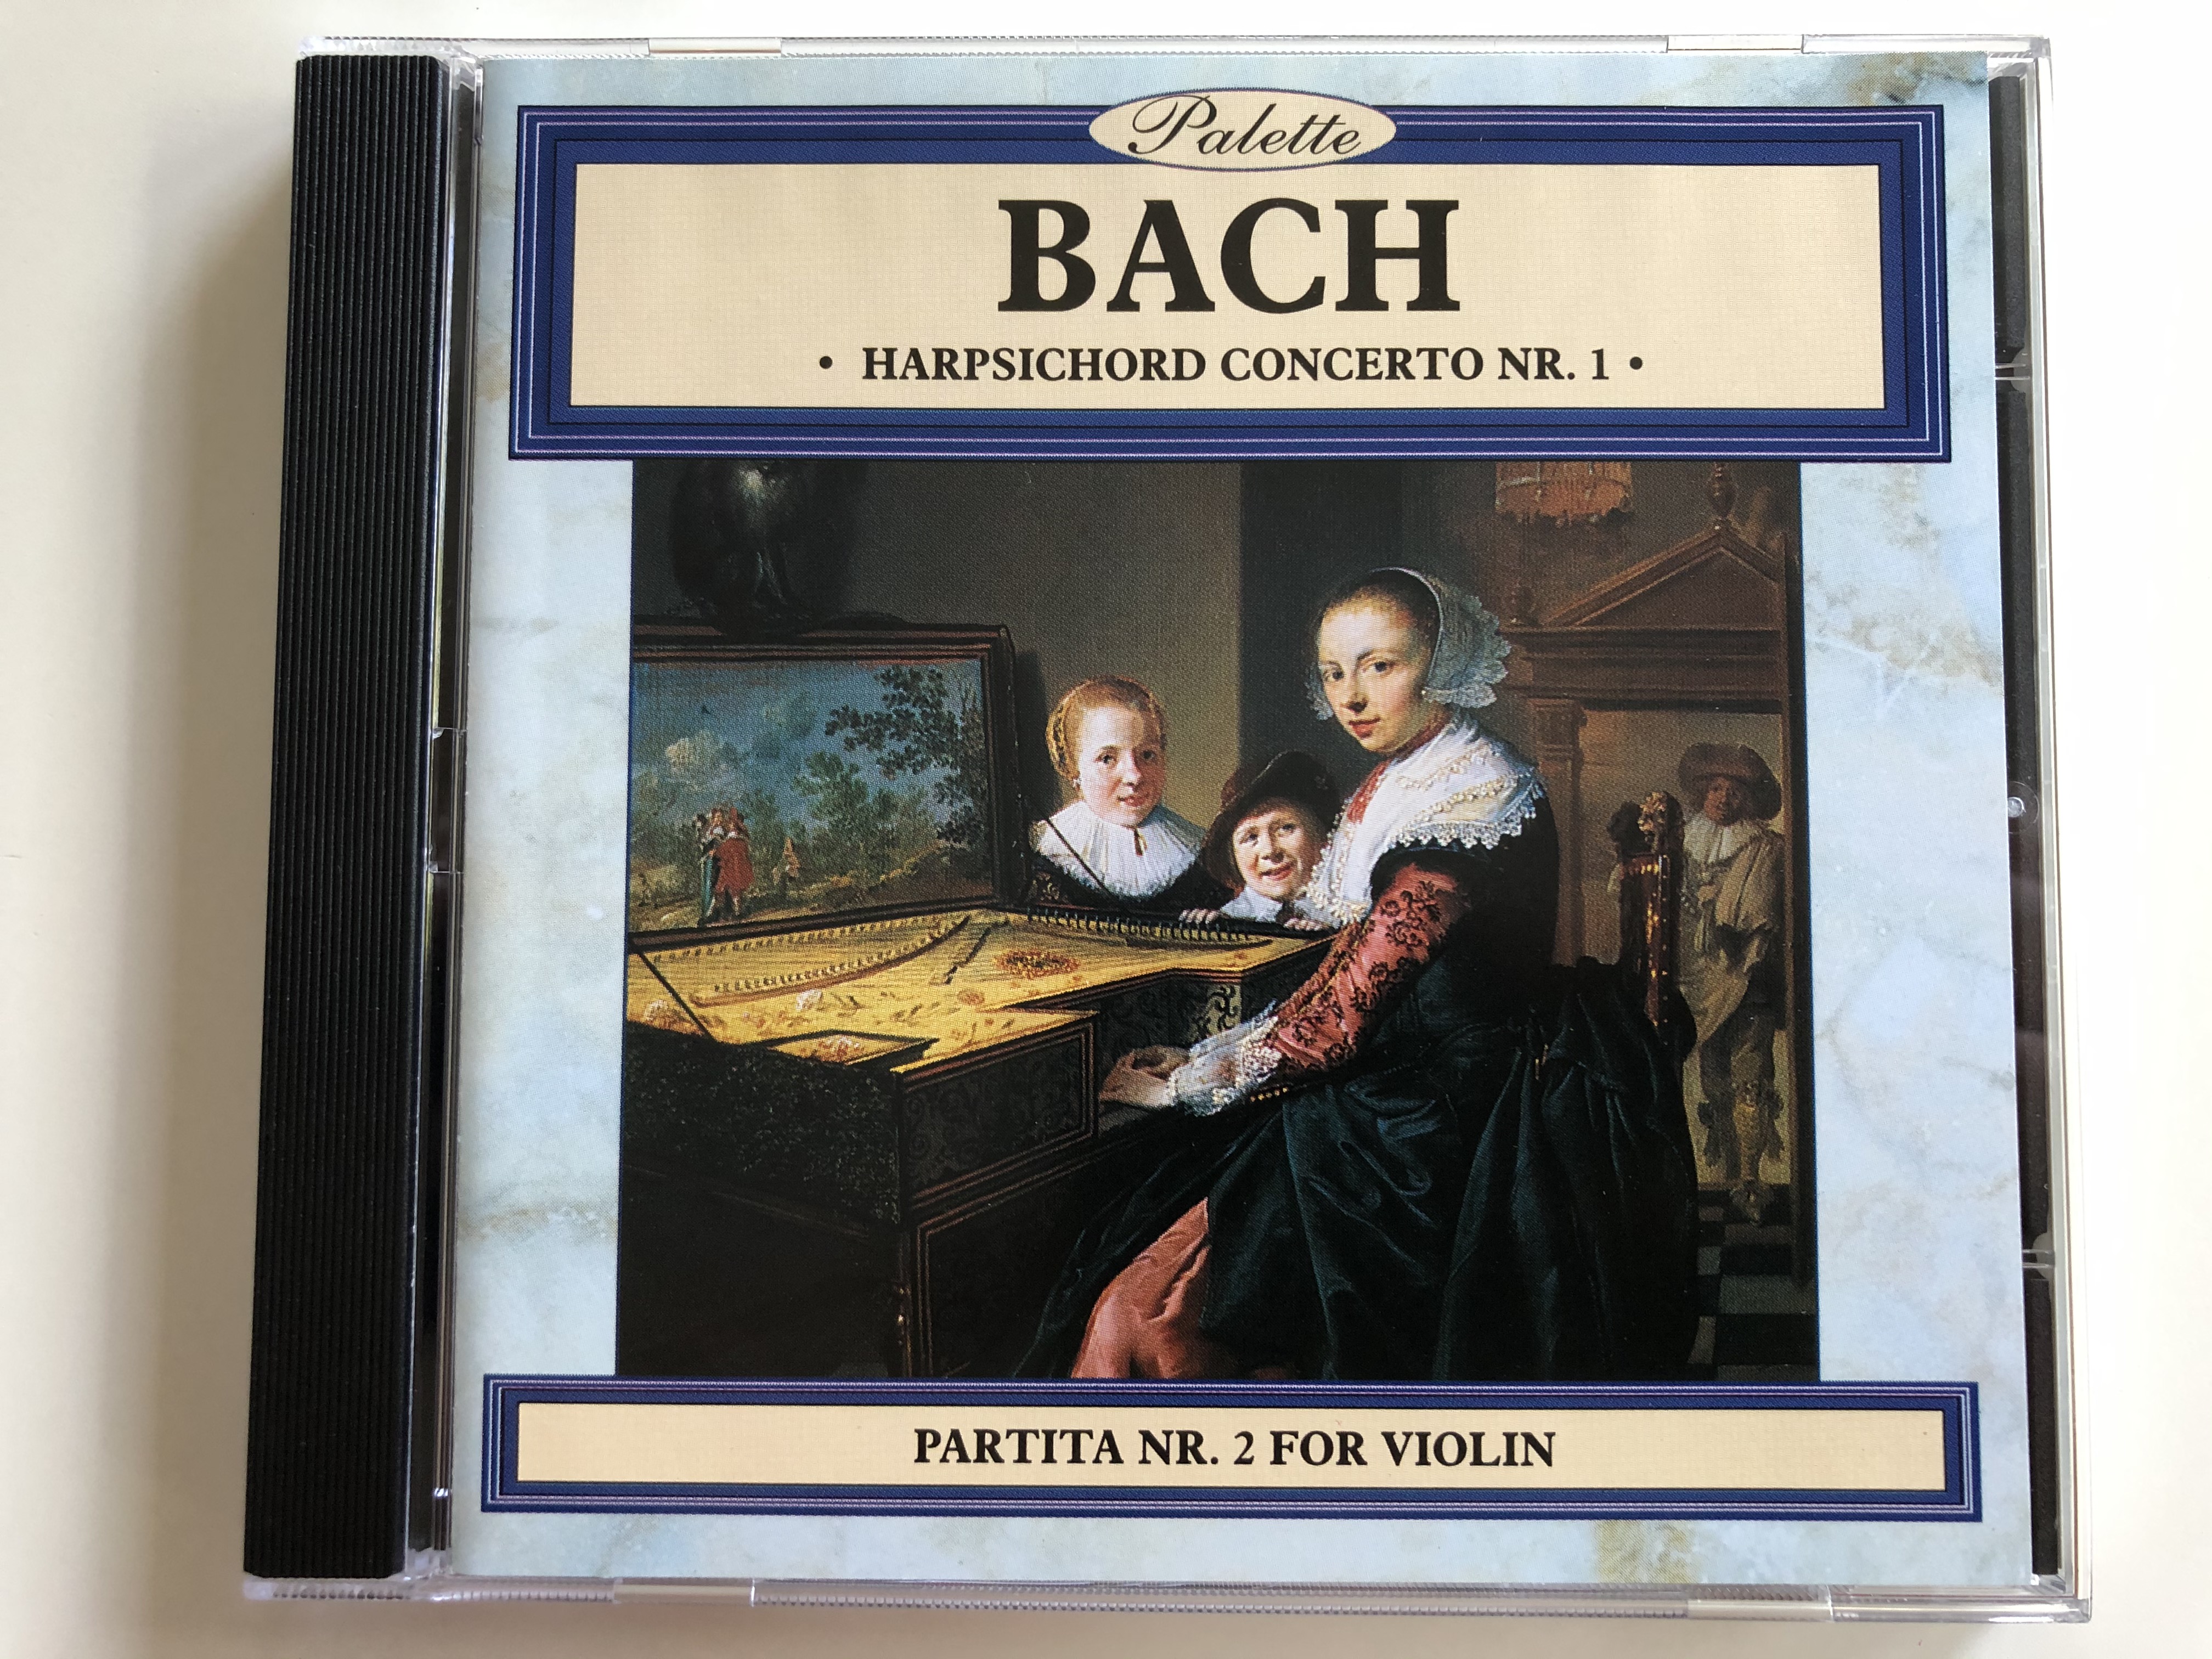 bach-harpsichord-concerto-nr.-1-partita-nr.-2-for-violin-palette-audio-cd-1996-pal026-1-.jpg